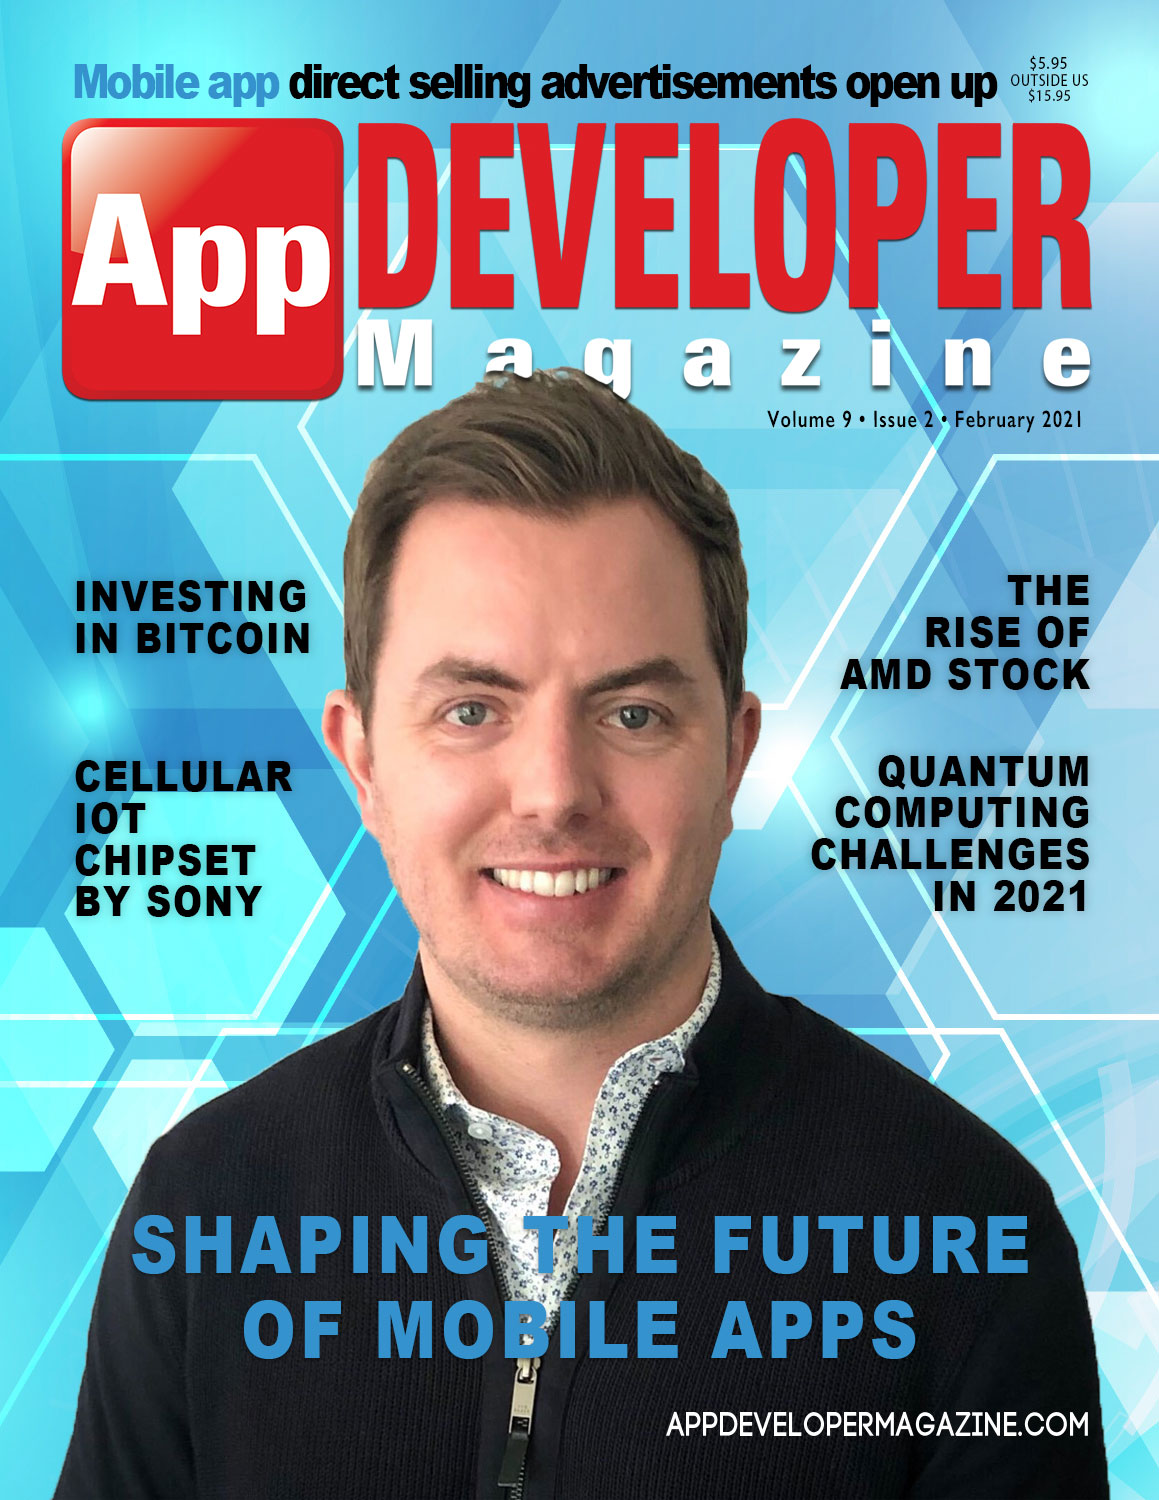 App Developer Magazine finalfebruarycoverphoto